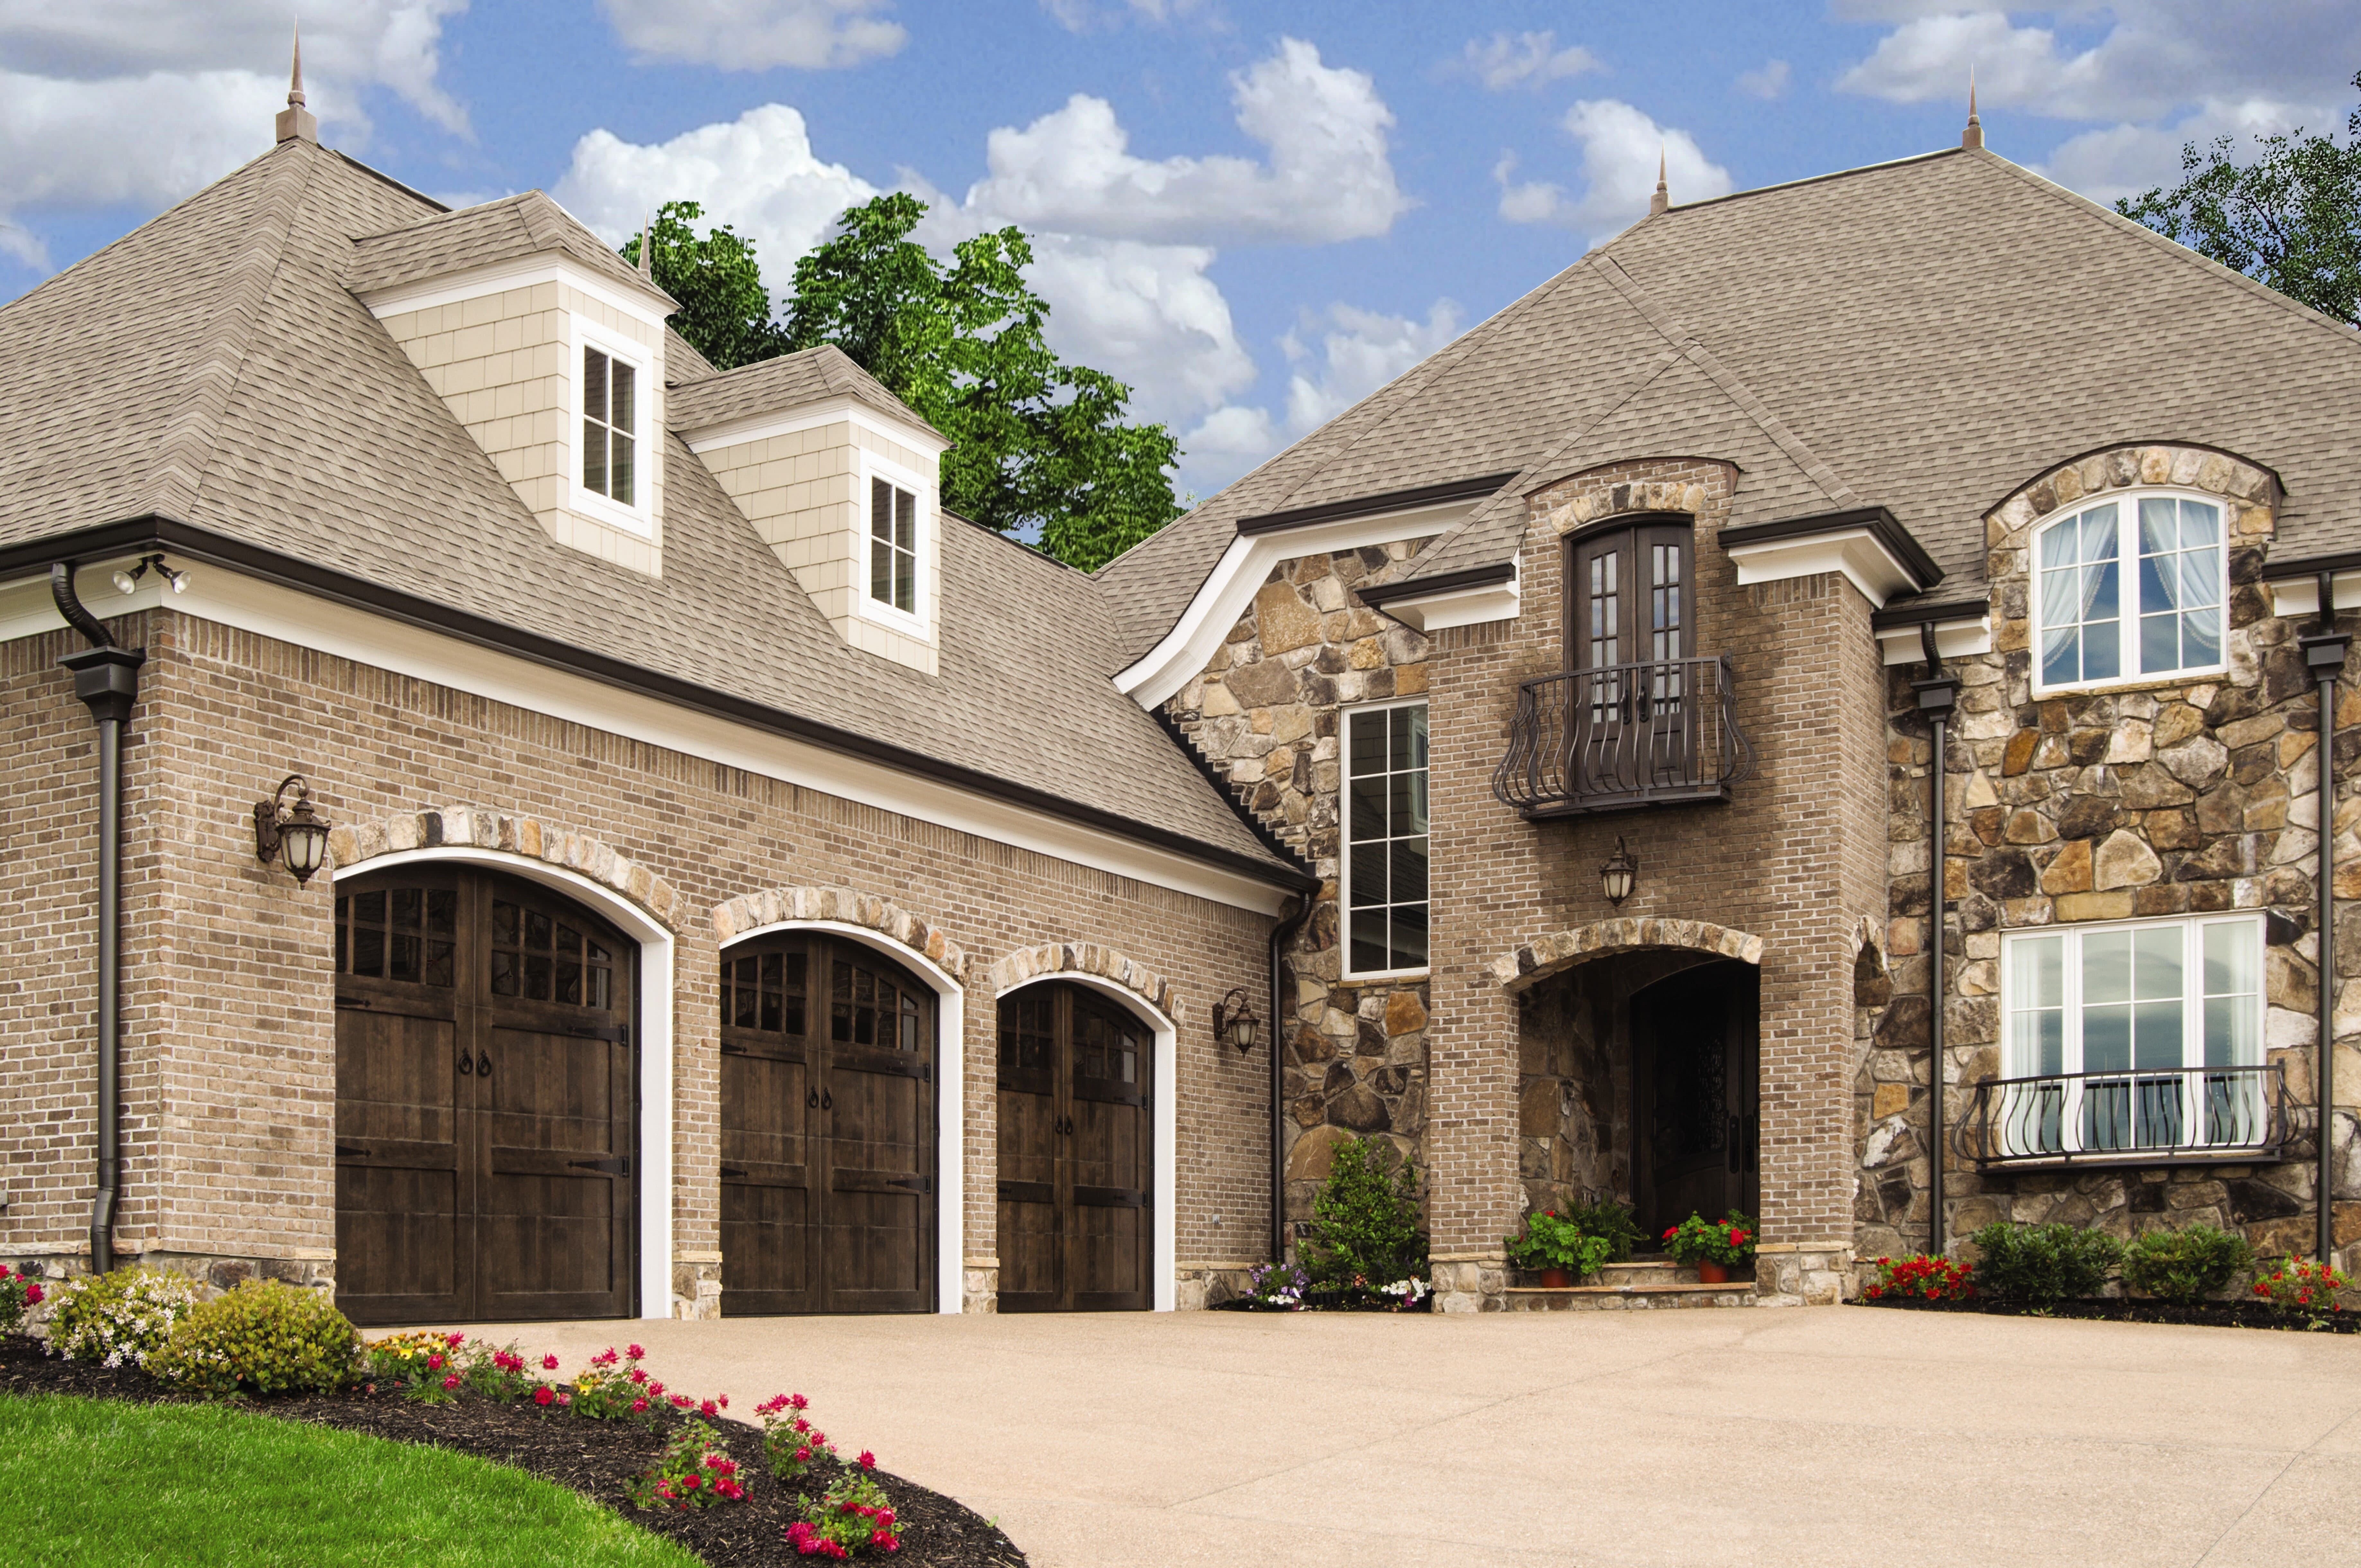 wayne-dalton-garage-doors-on-new-home.jpeg?mtime=20191114081902#asset:15175